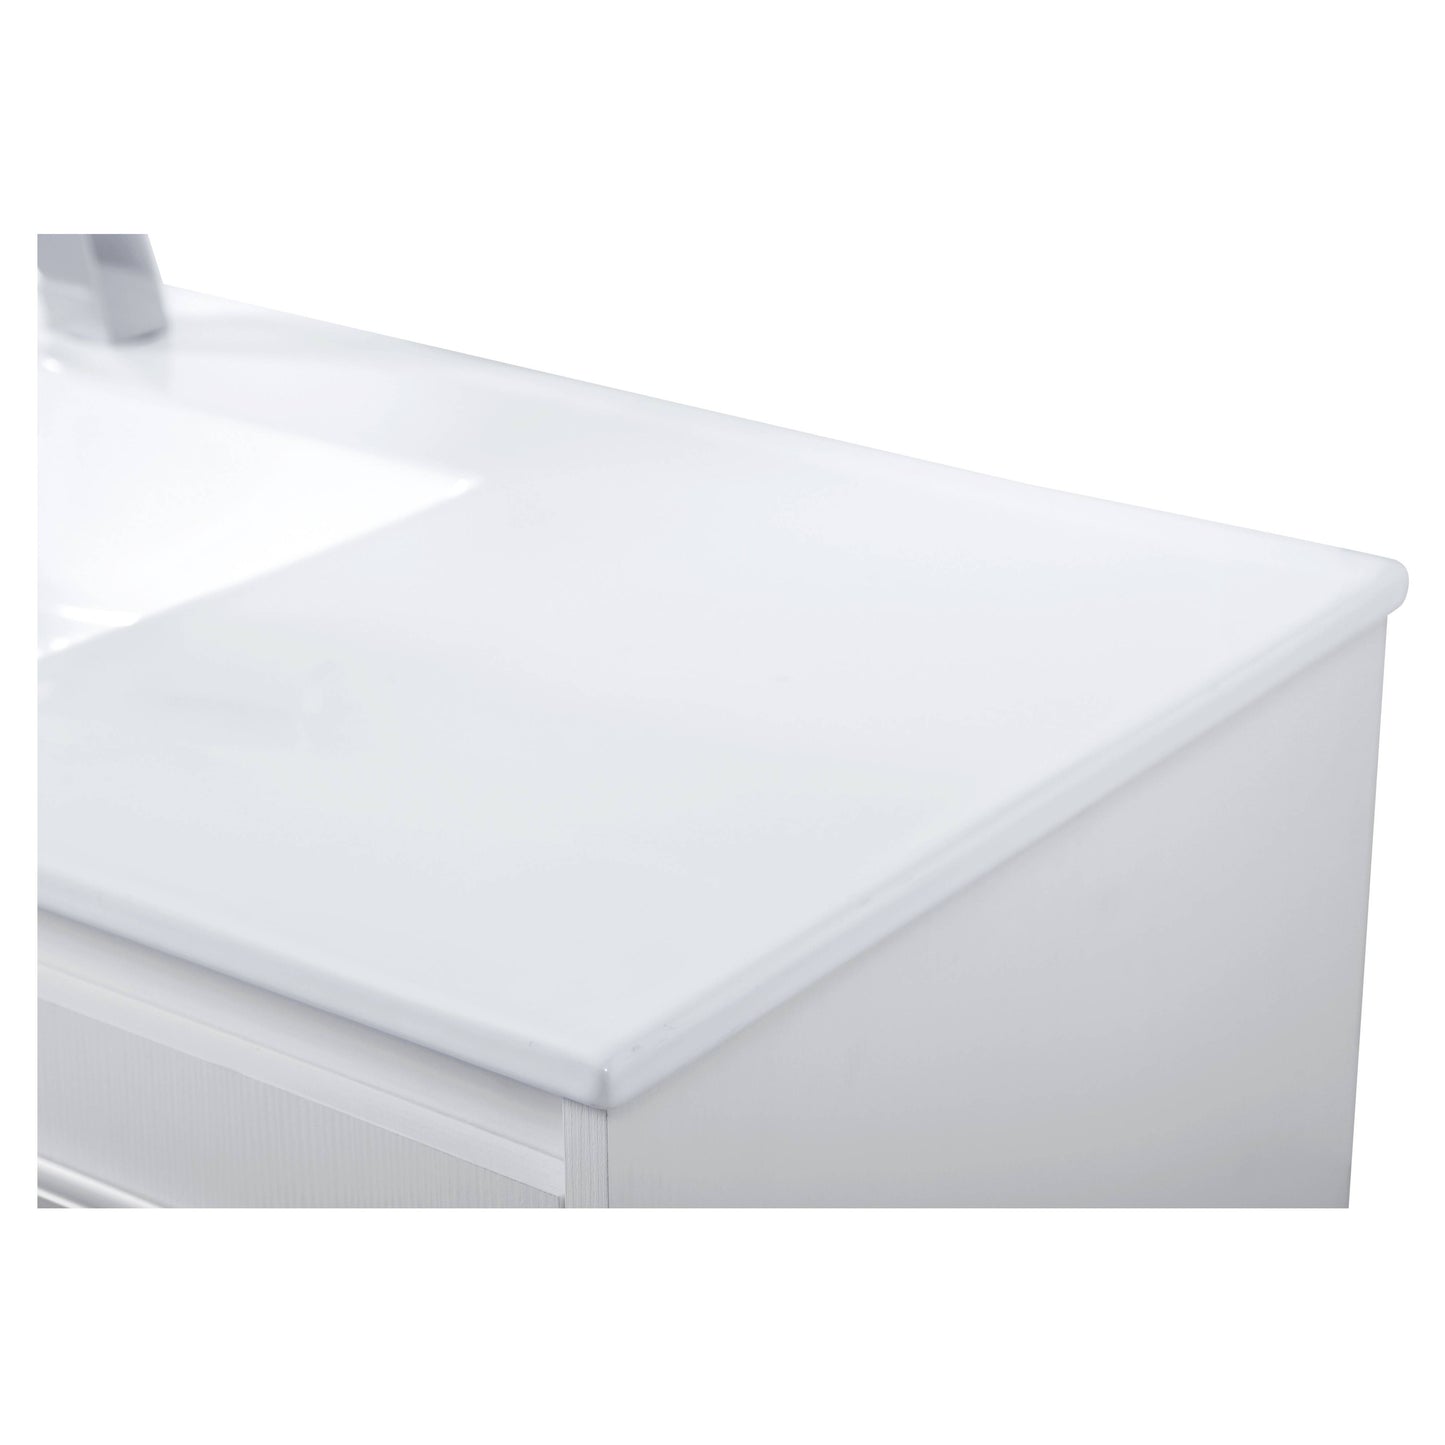 VF44048WH 48" Single Bathroom Floating Vanity in White